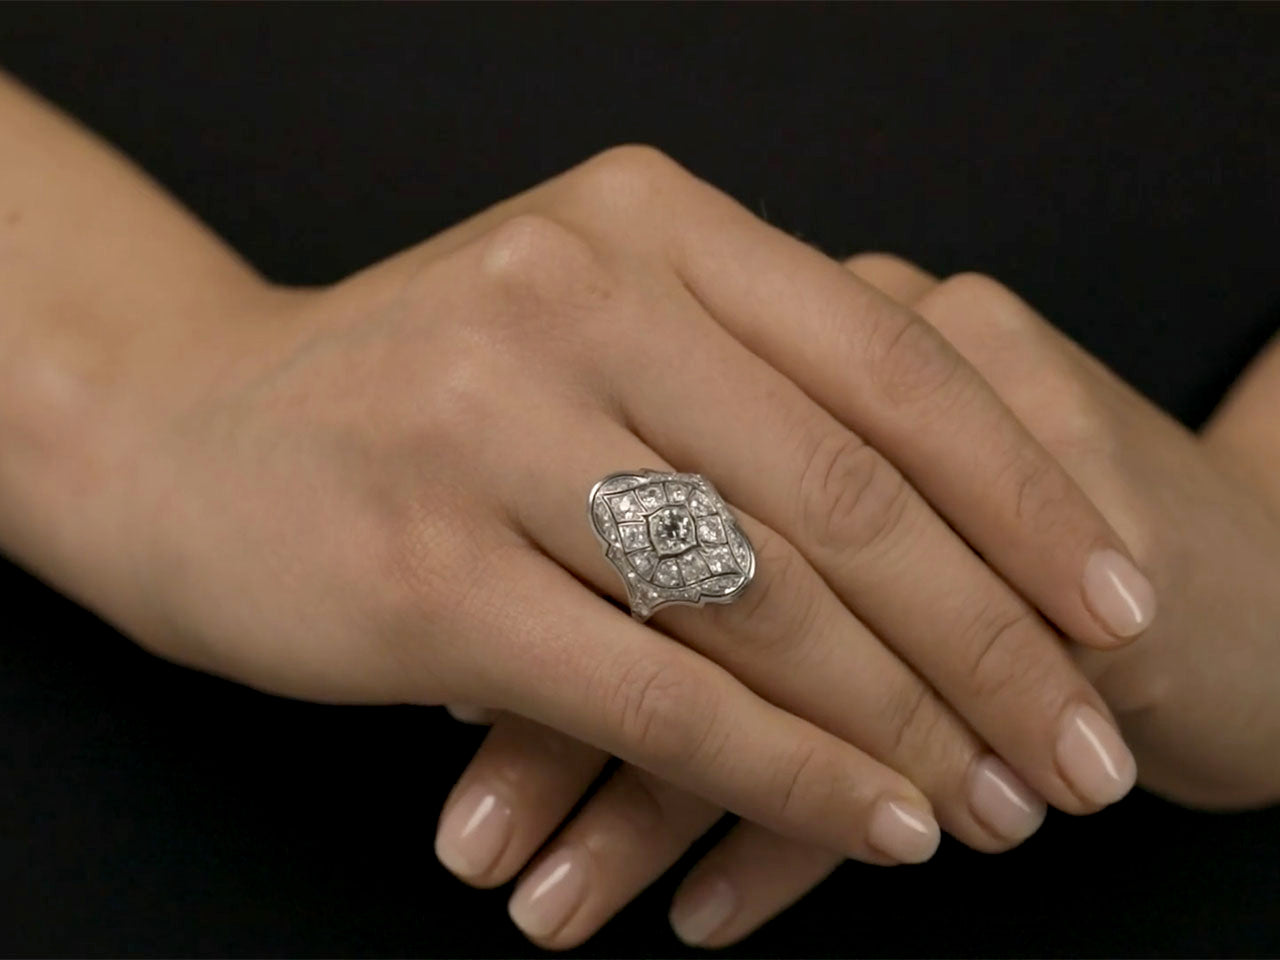 Antique Edwardian Elongated Diamond Ring in Platinum